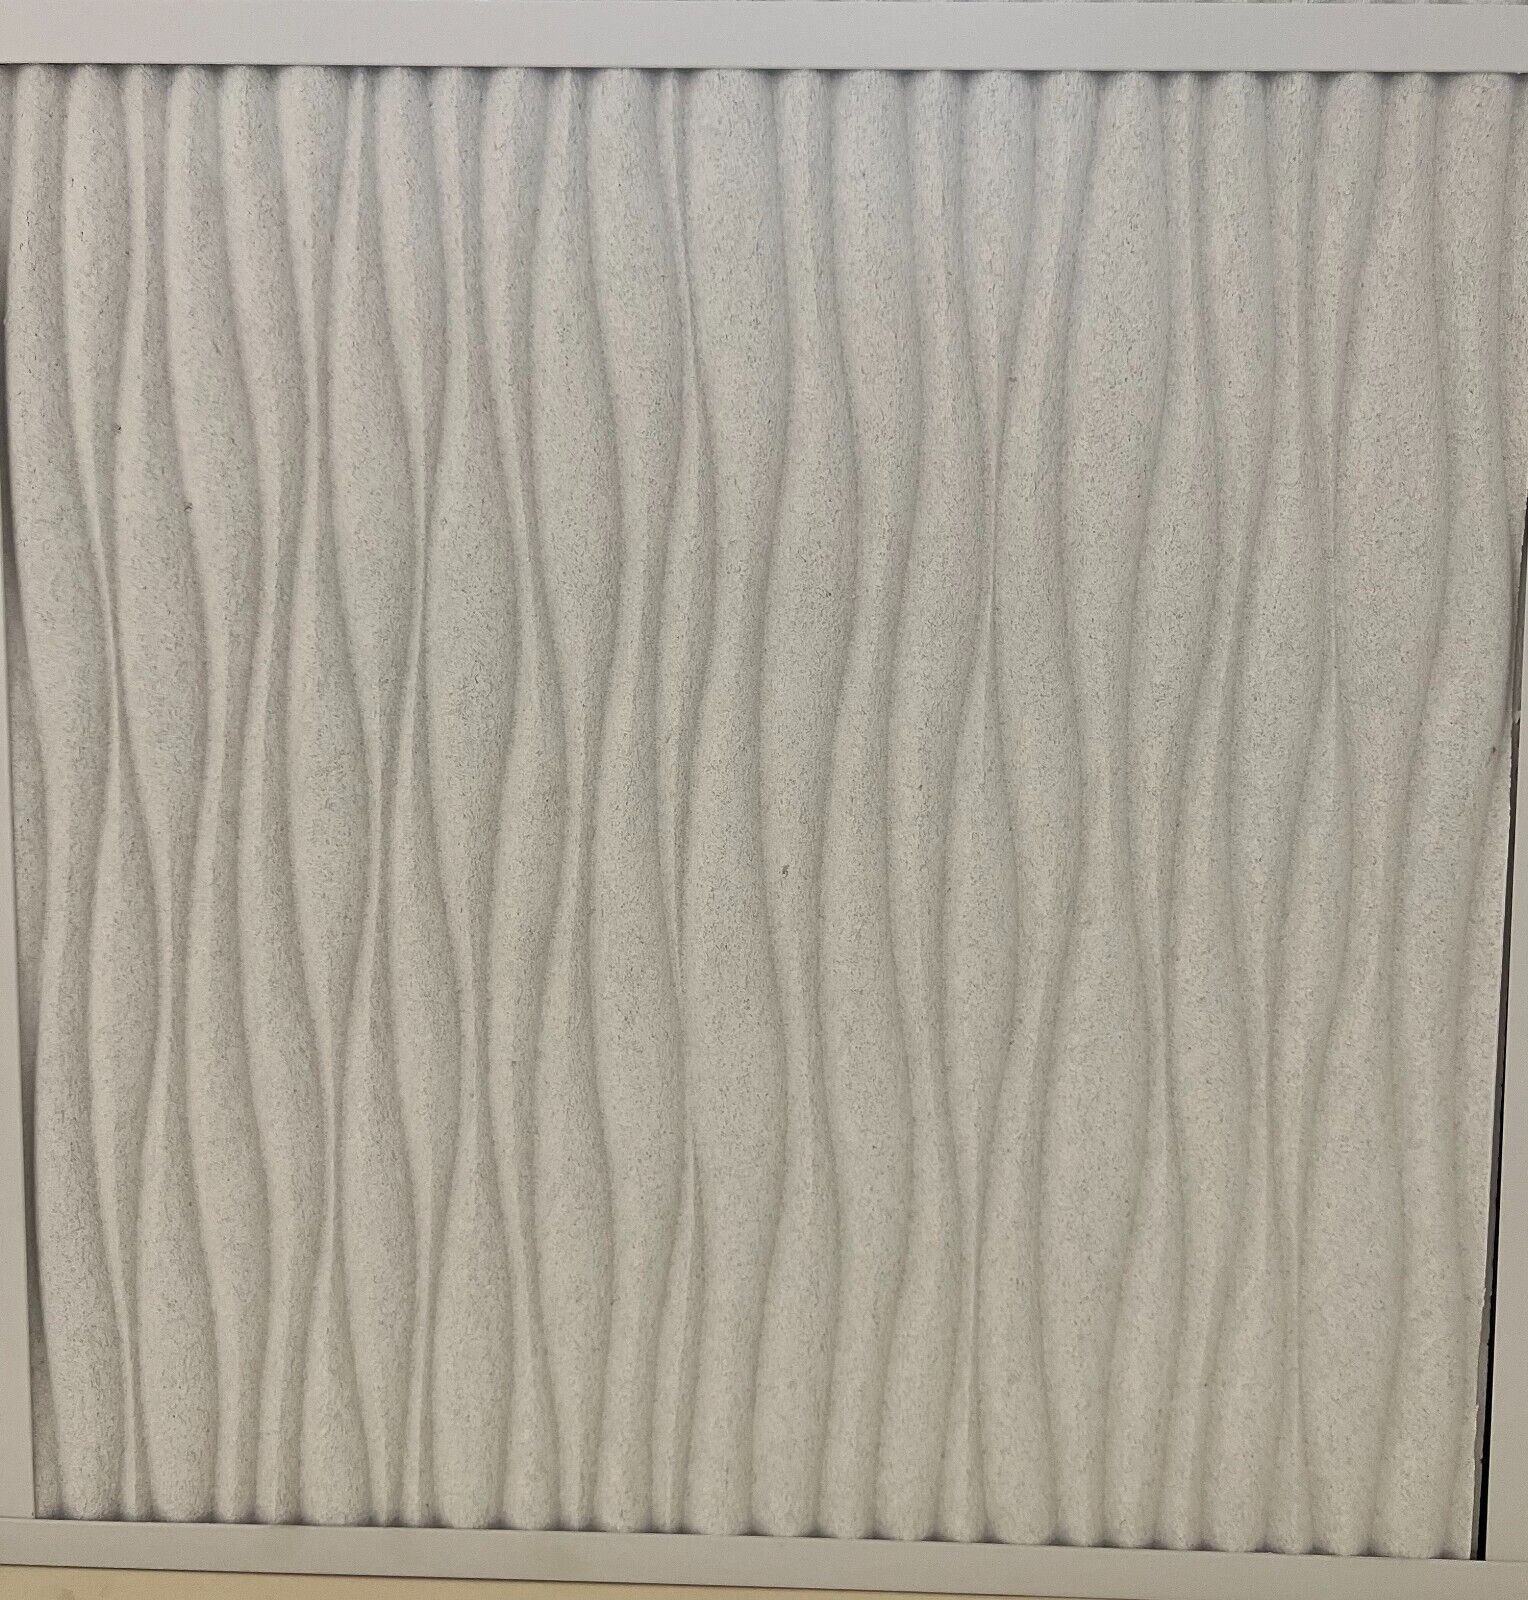 Isi Legacy Contoura Ceiling Tiles, Ripplewave, 24"x24"x3/4", Flb, White